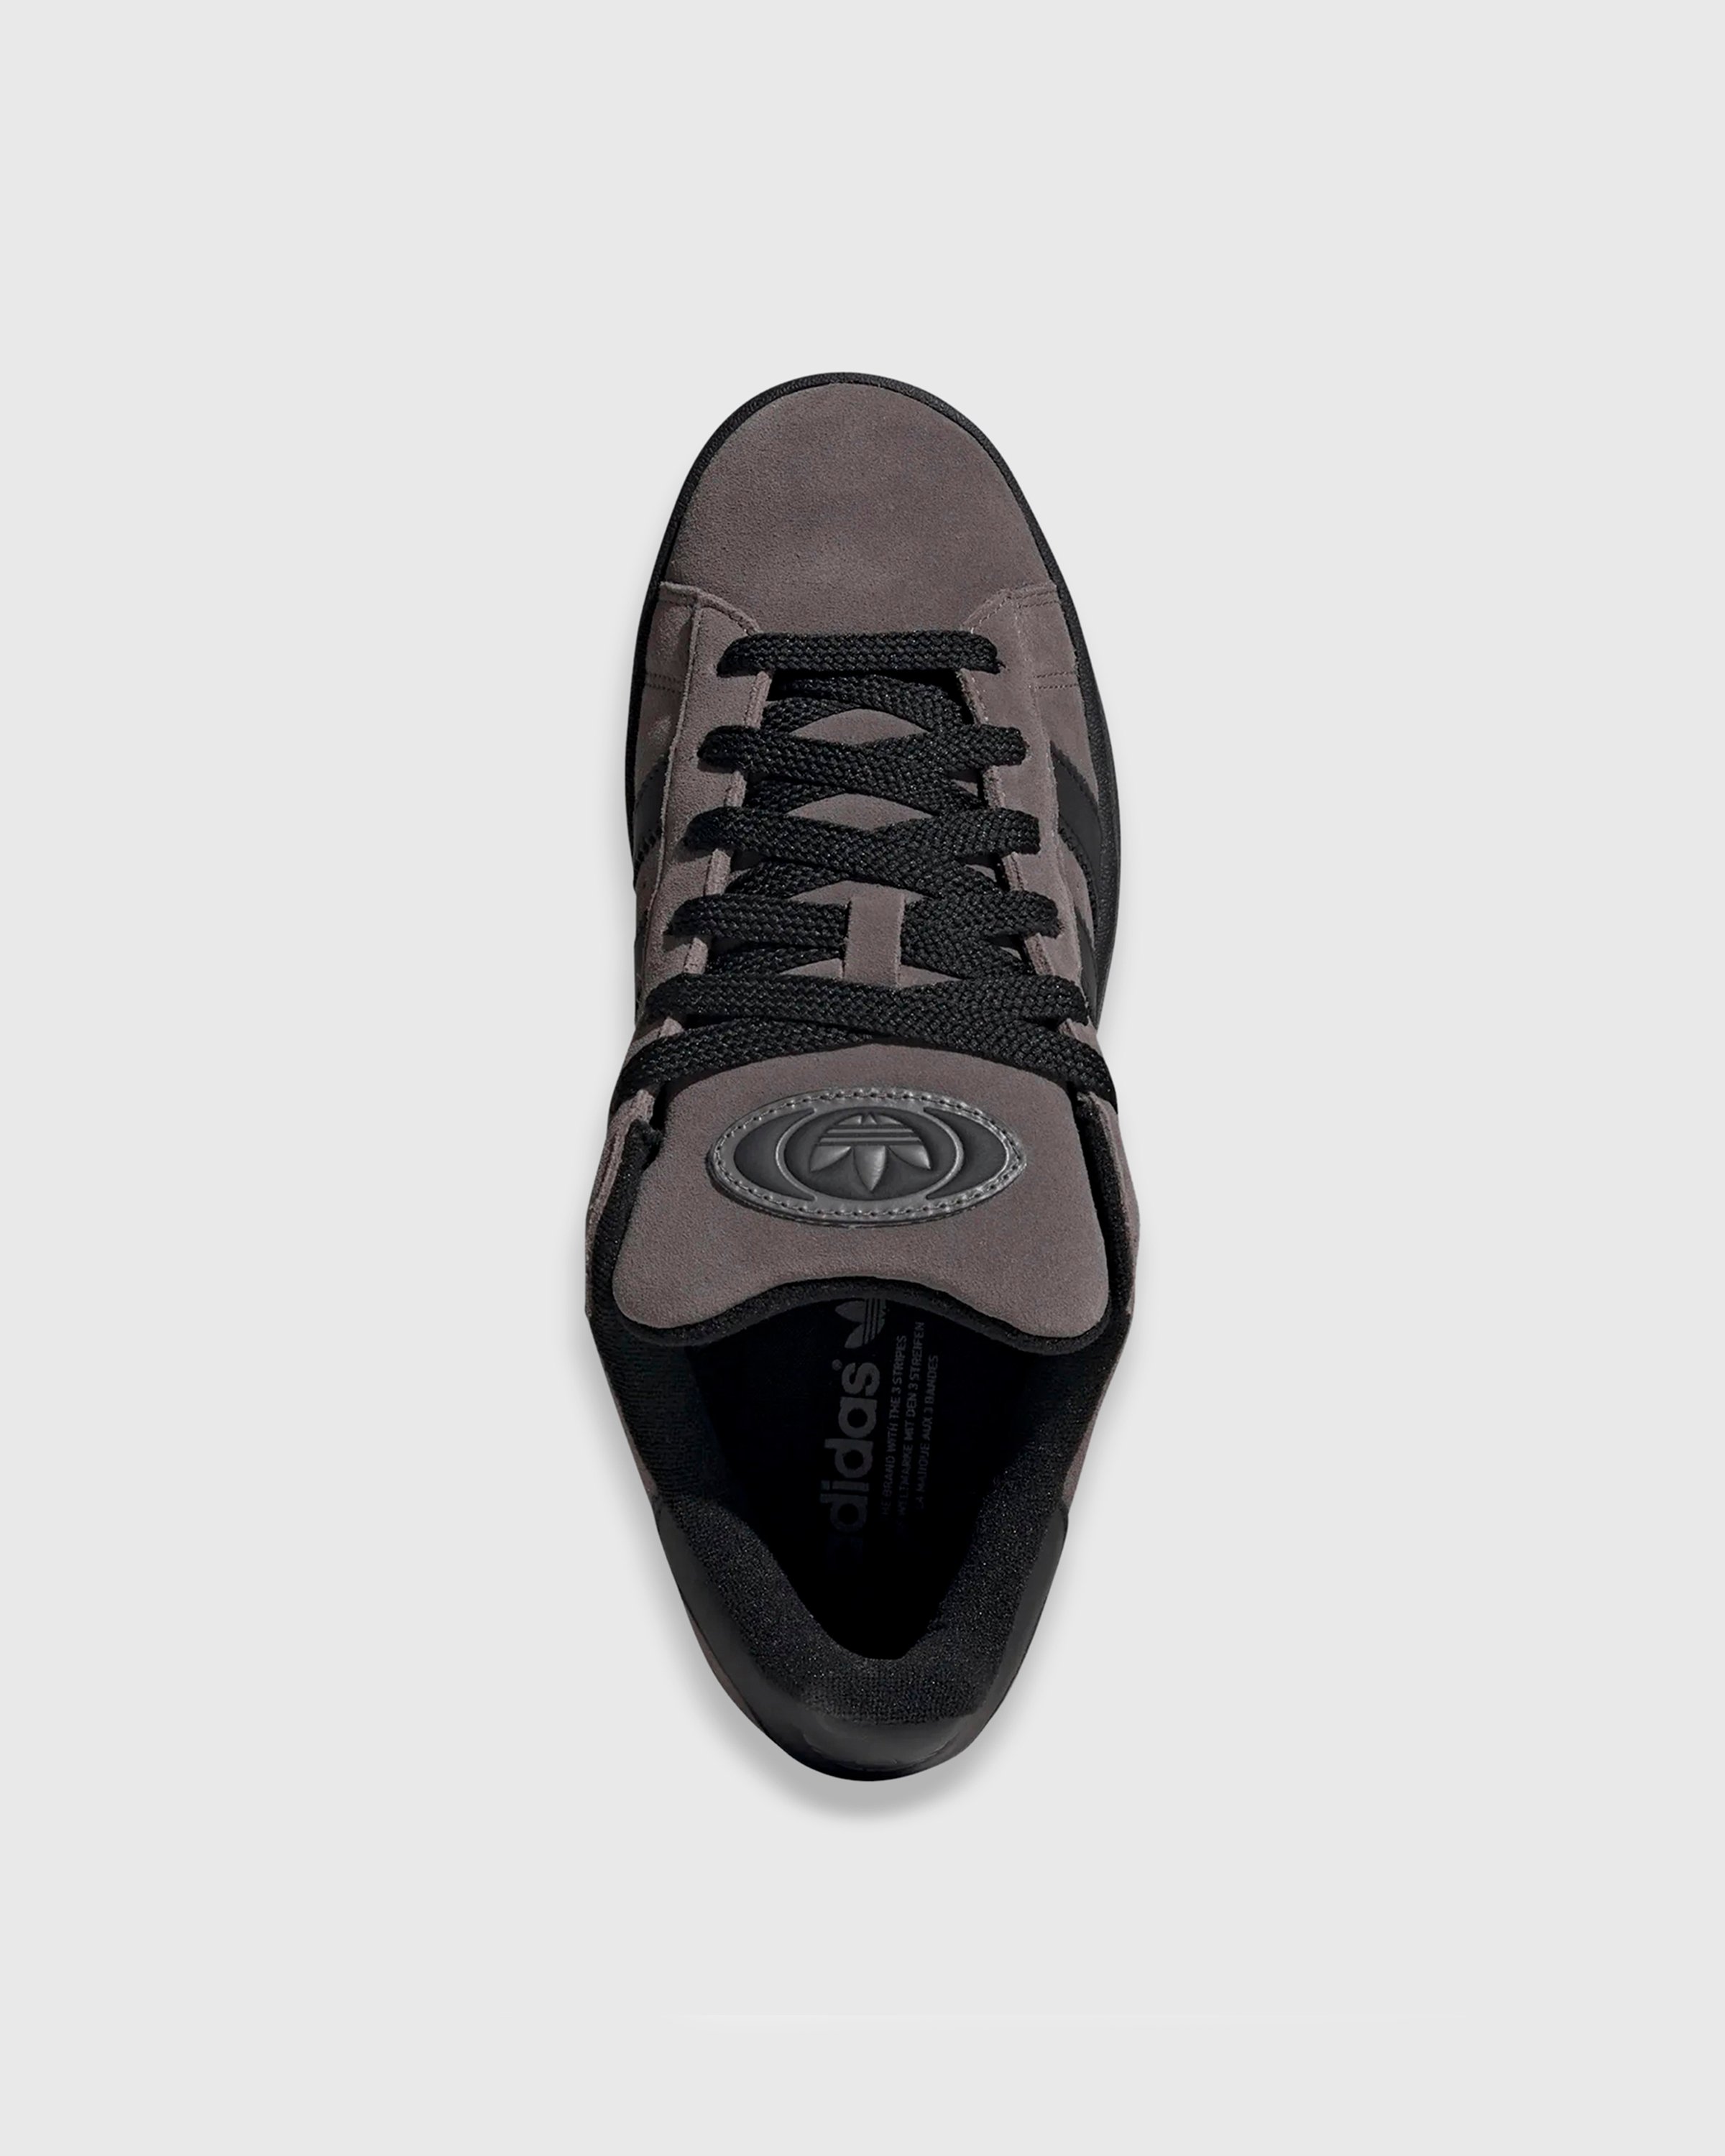 Adidas - CAMPUS 00s          CHACOA/CBLACK/CHACOA - Footwear - Grey - Image 5